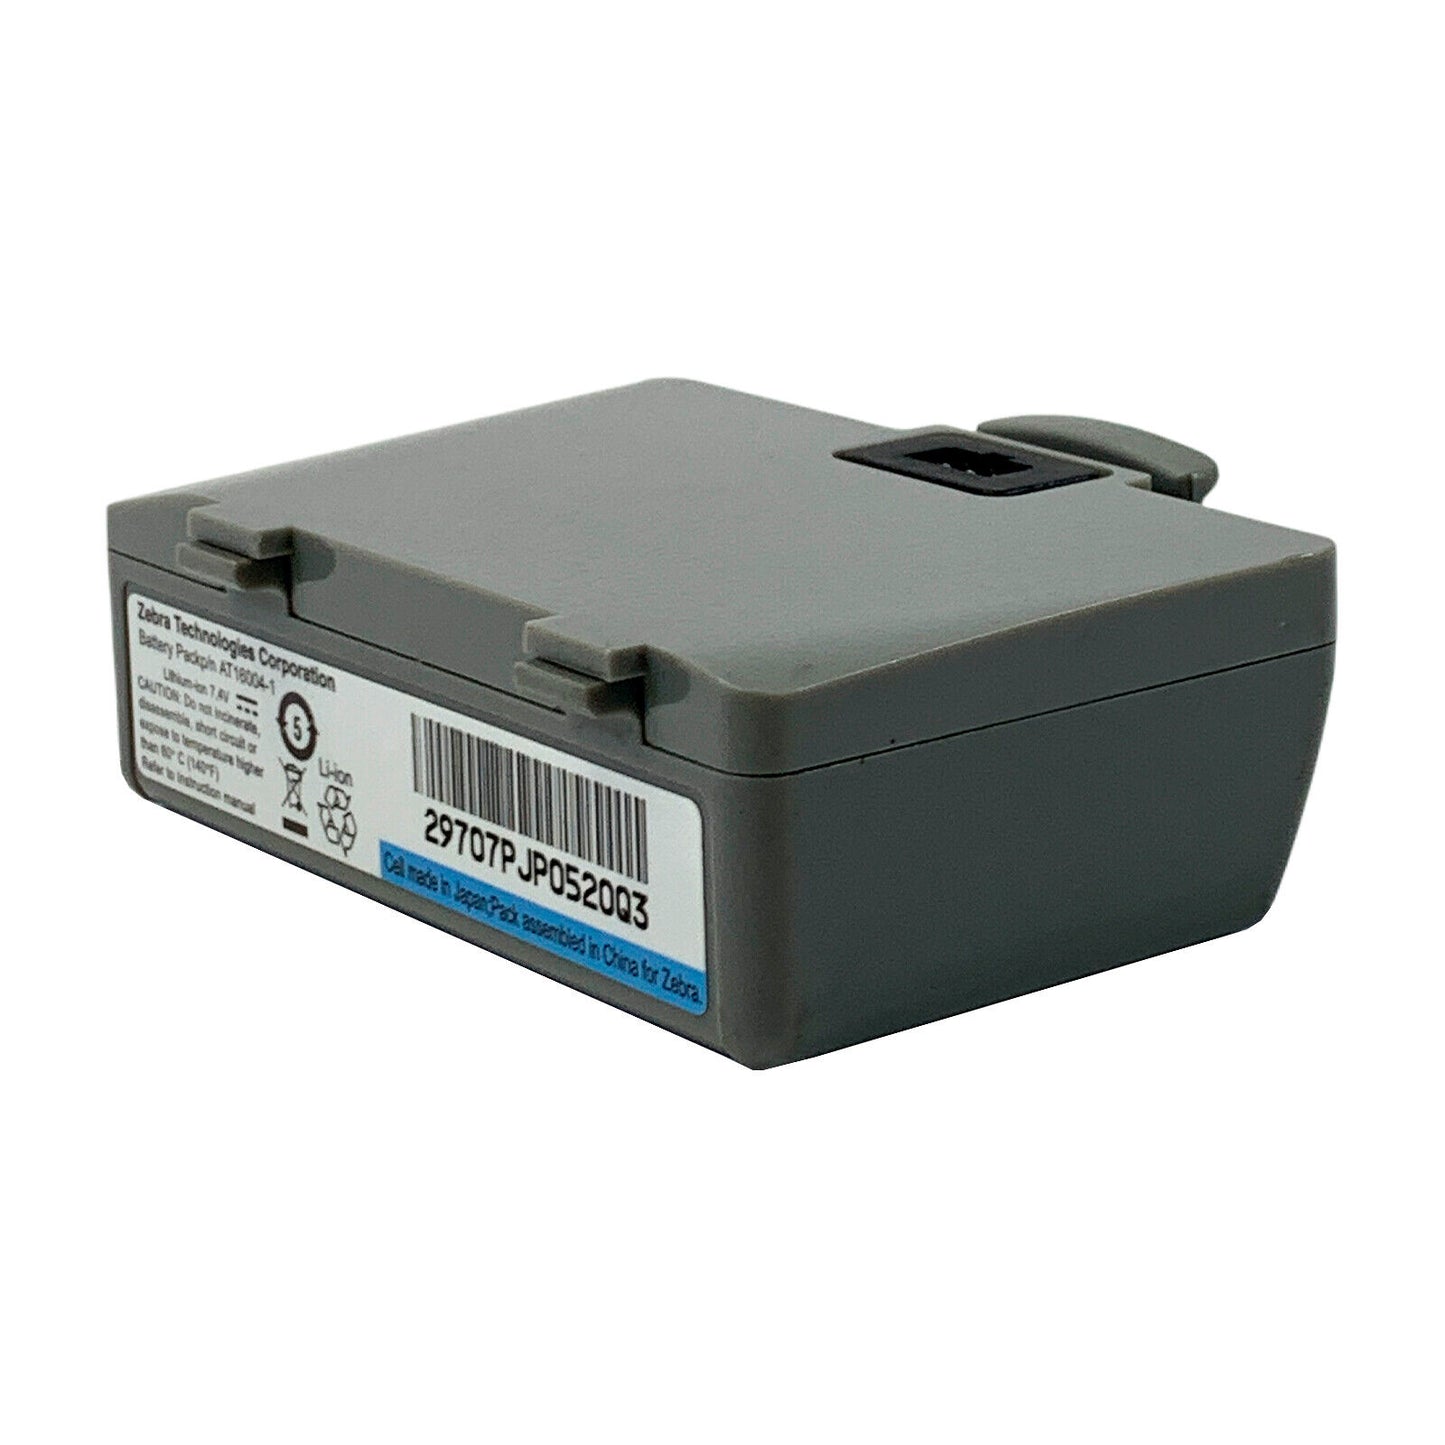 New OEM Zebra Li-Ion Battery AT16004-1 7.4V for QL220 QL320 Plus Printers